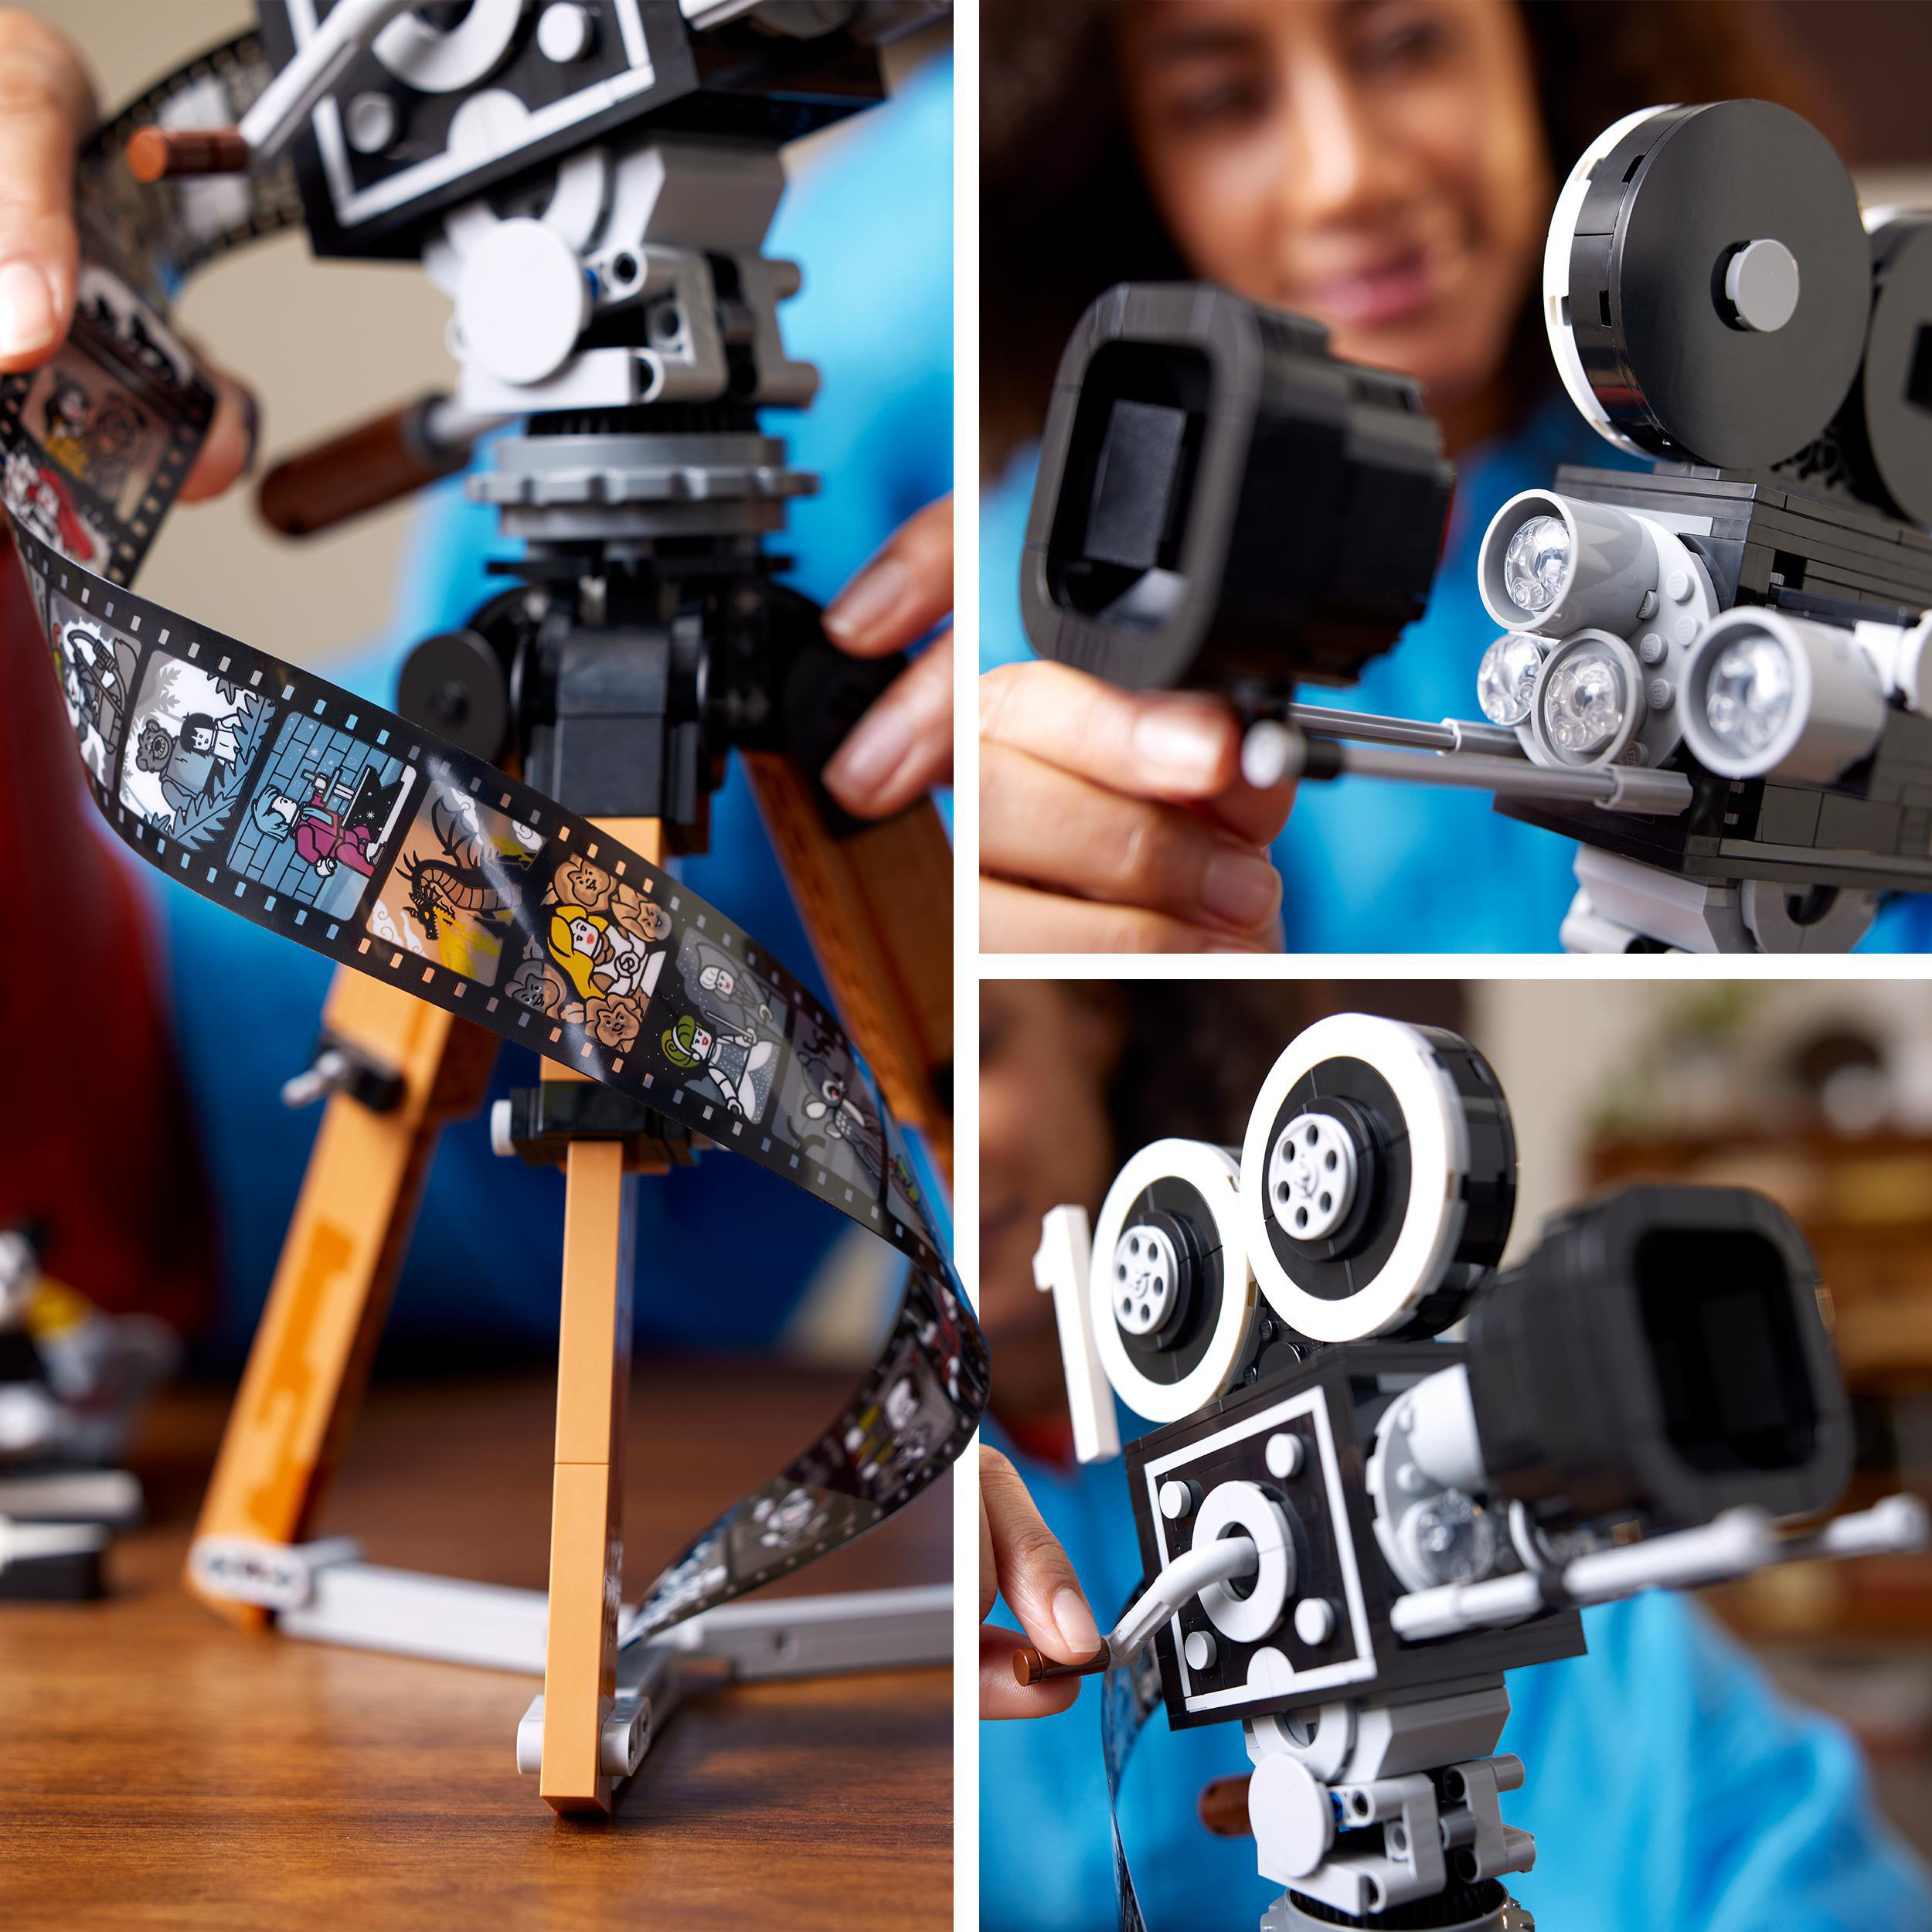 Hommage – an Walt Disney Bausatz, 43230 Mehrfarbig Disney Kamera LEGO